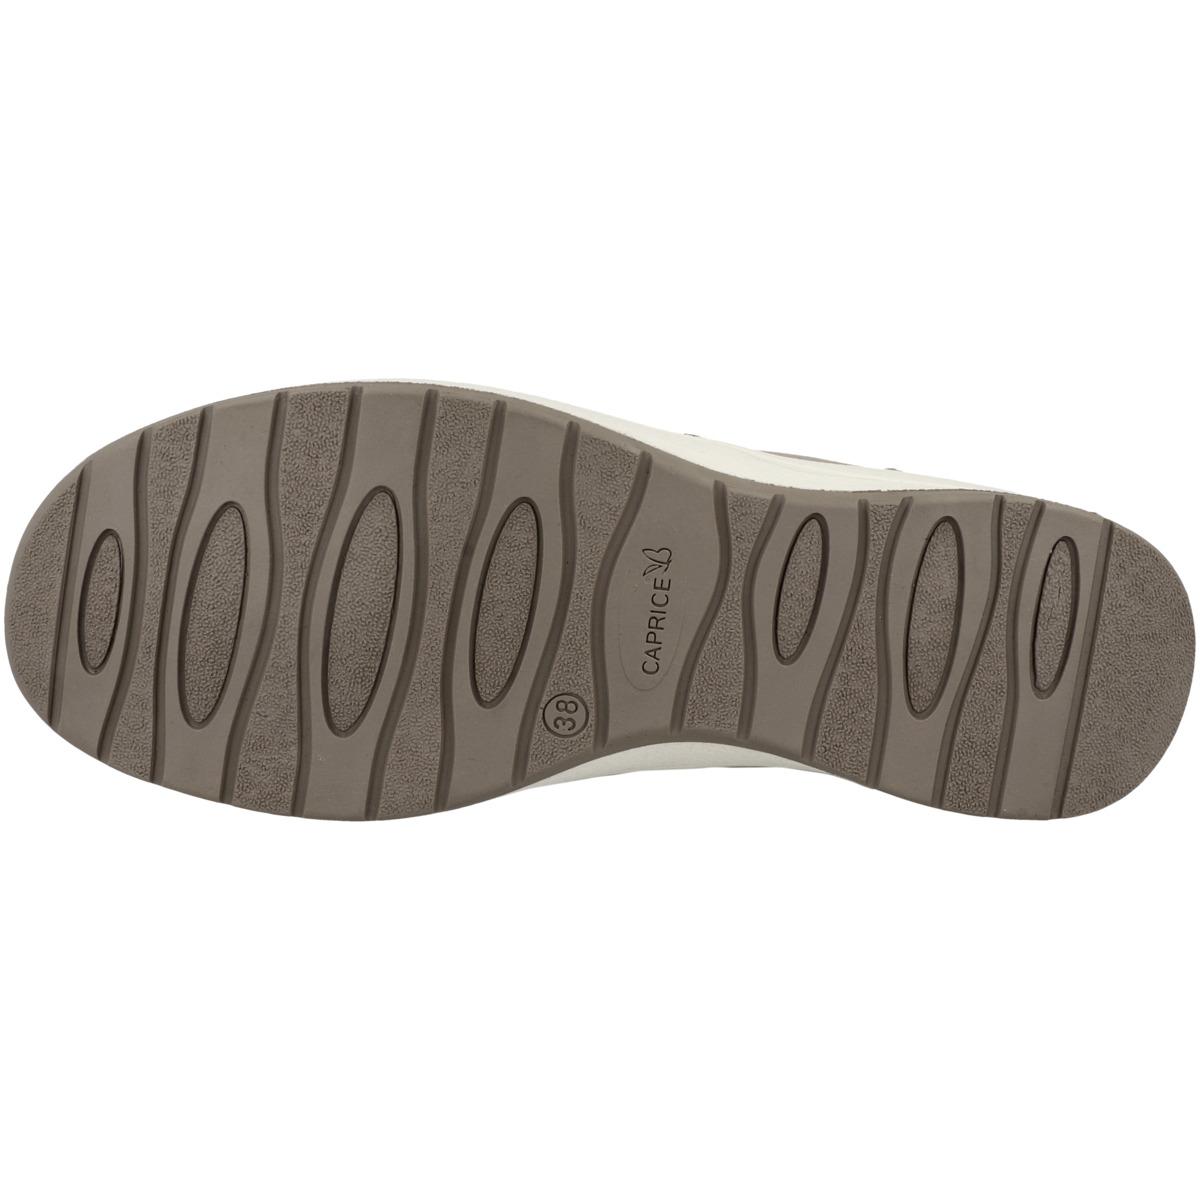 CAPRICE 9-23760-20 Sneaker low braun